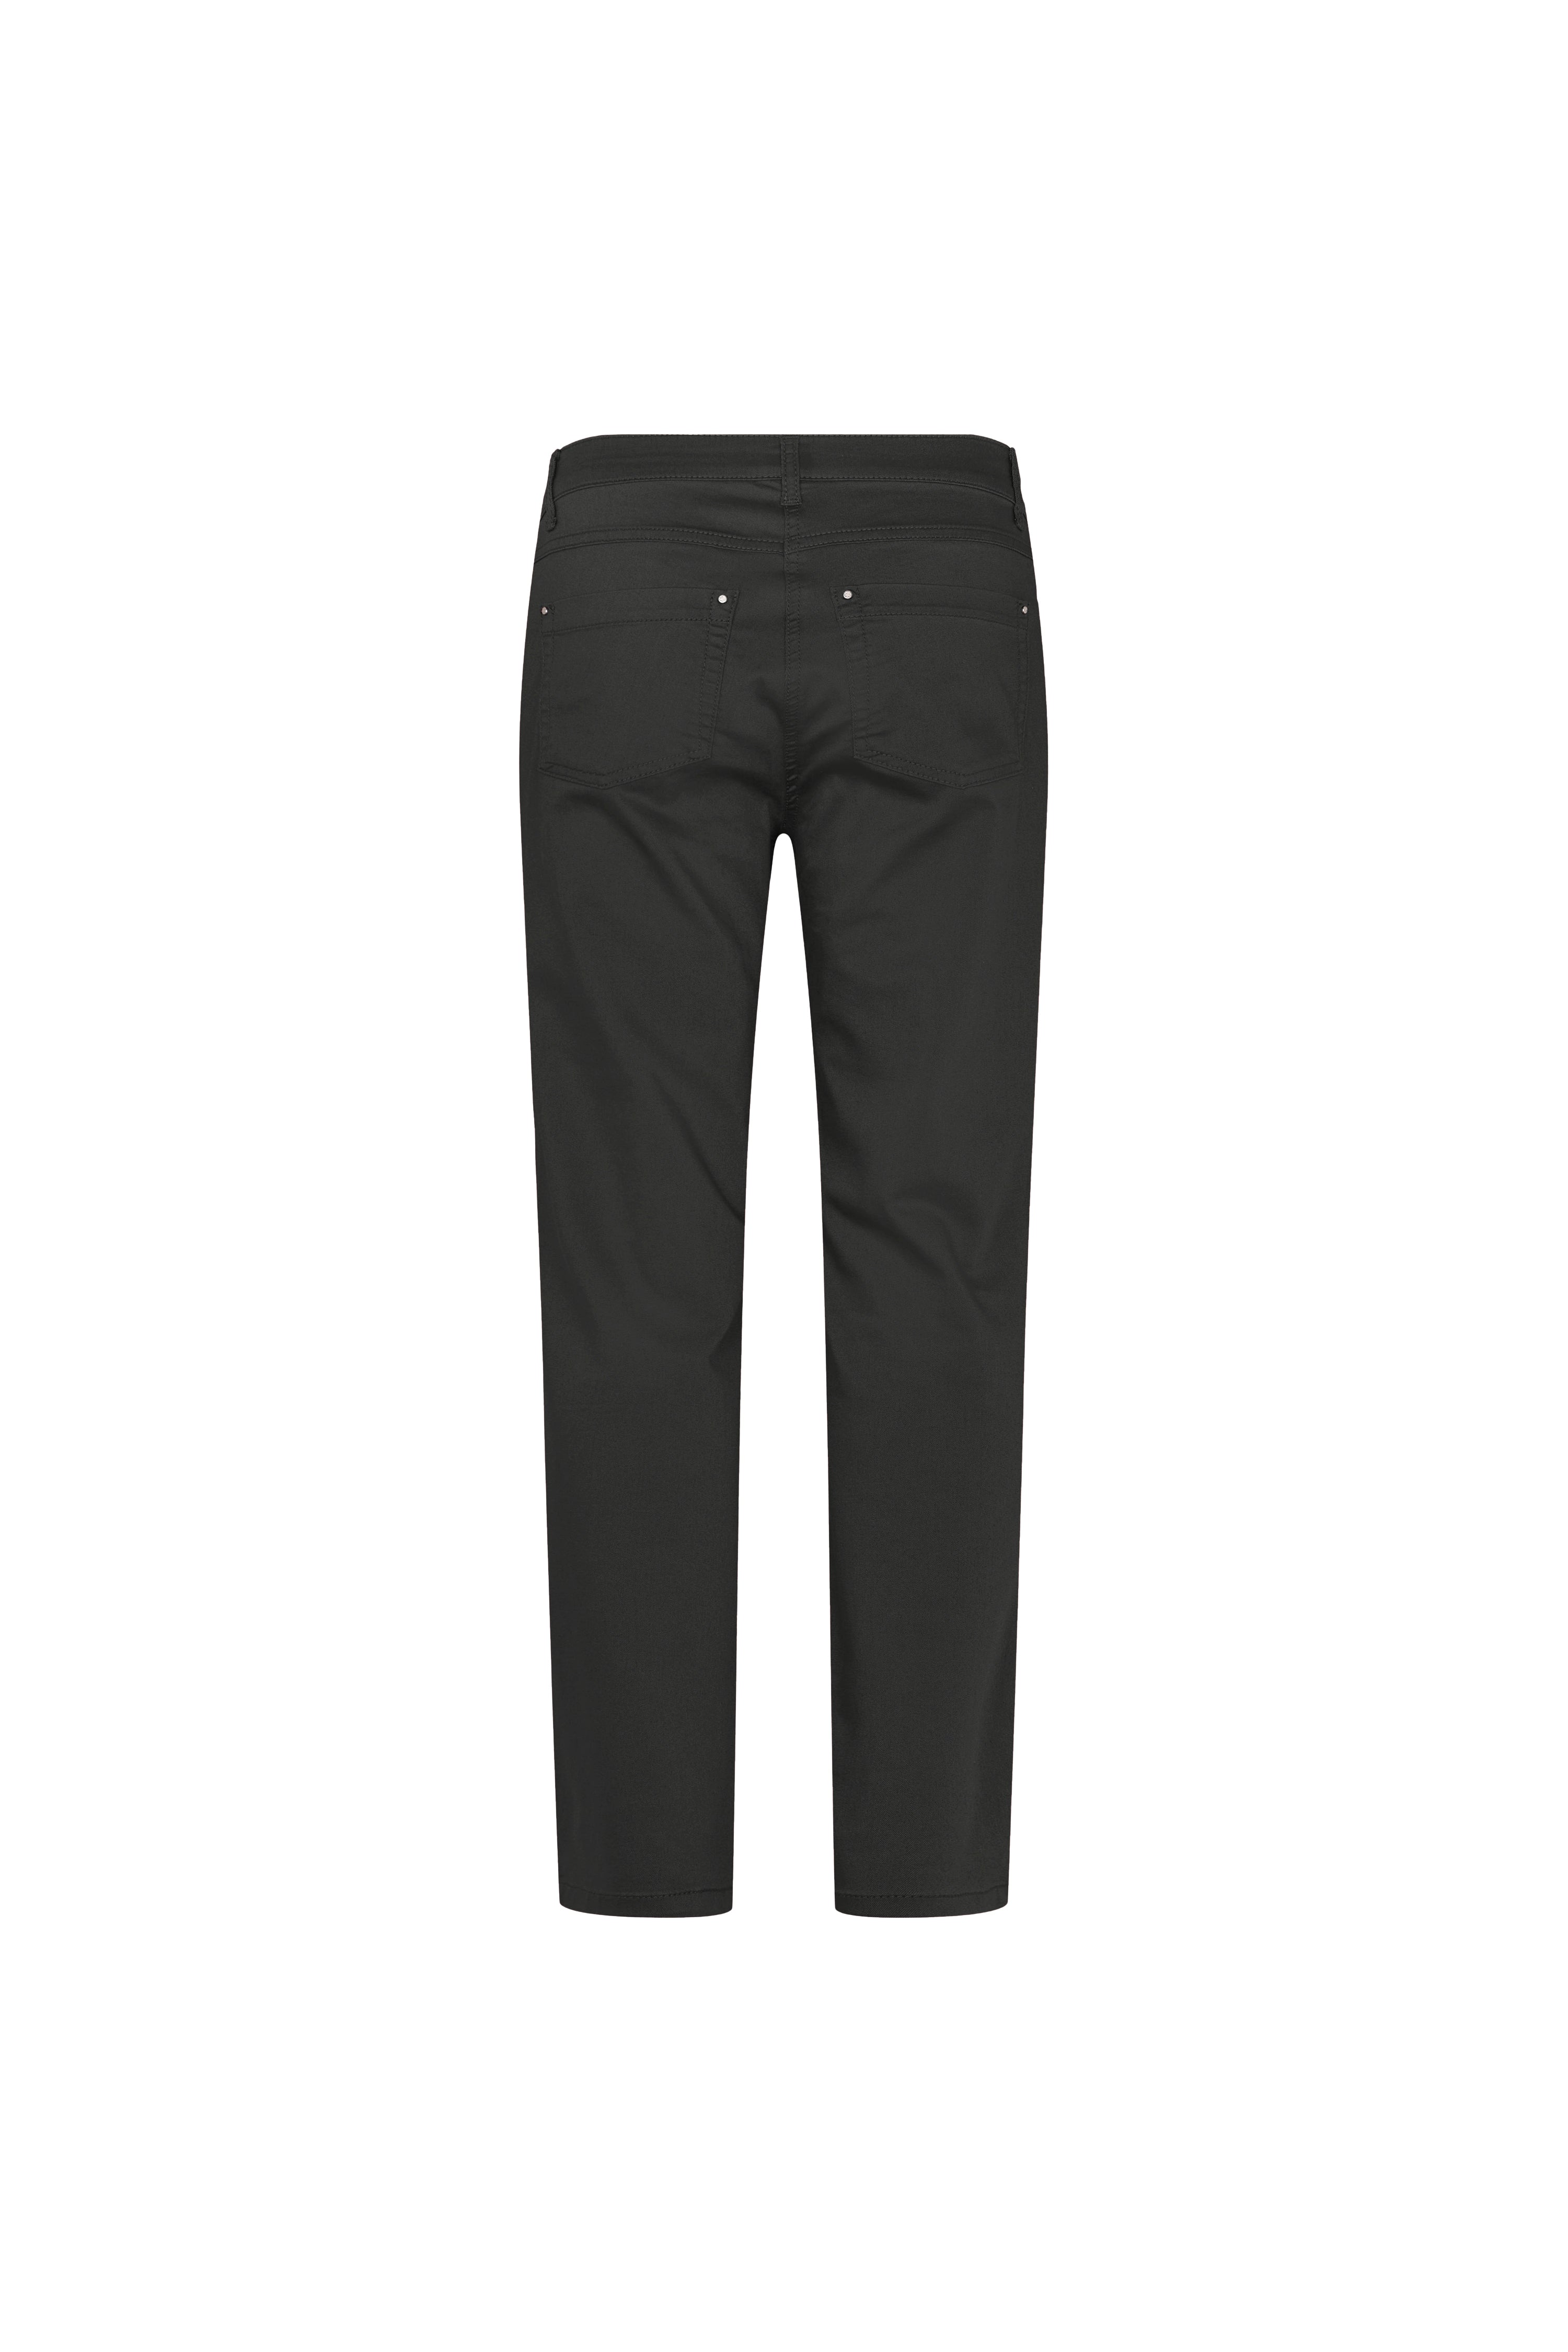 LAURIE  Charlotte Regular - Medium Length Trousers REGULAR 99100 Black